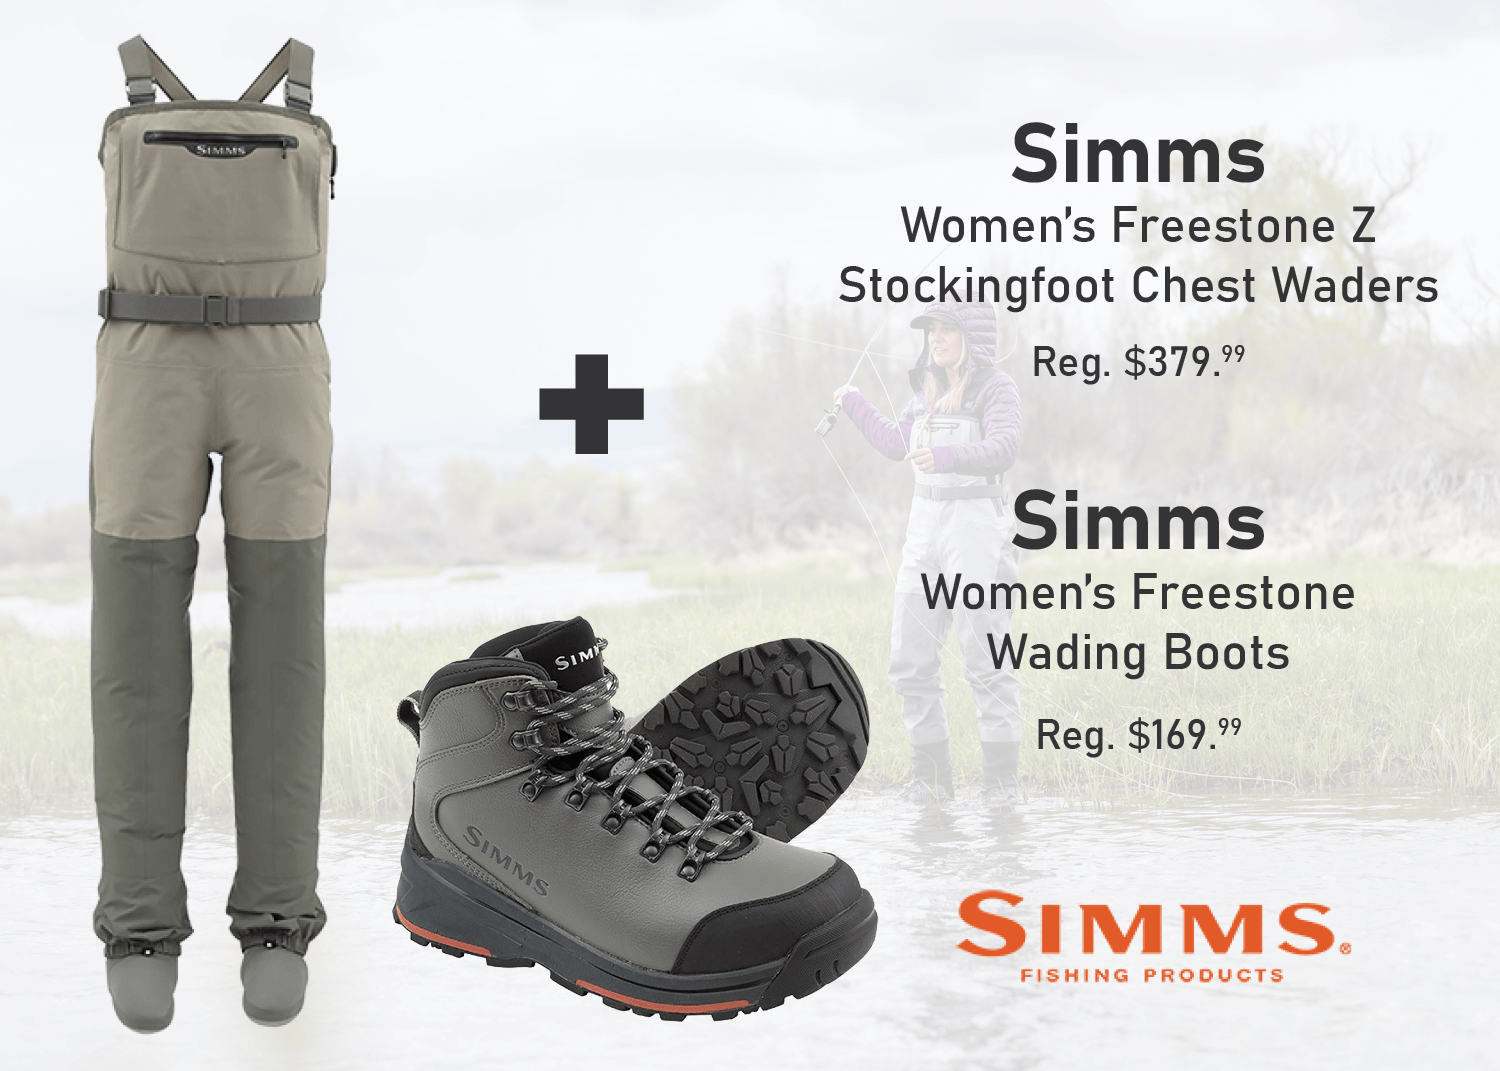 Simms Women's Freestone Z Stockingfoot Chest Waders + Simms Women's Freestone Wading Boots